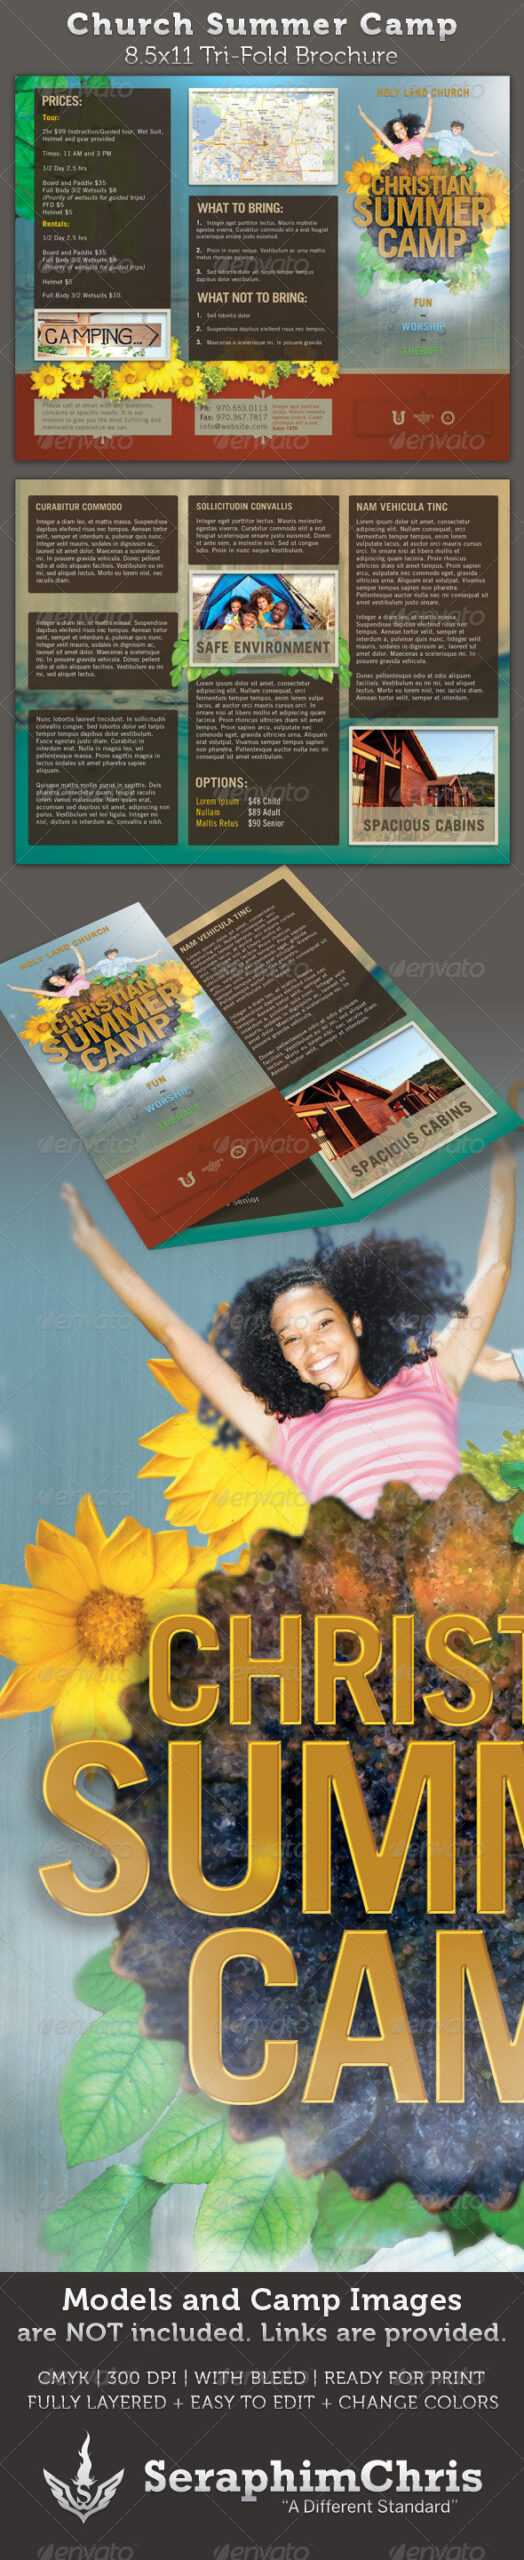 Summer Camp Brochure Graphics, Designs & Templates Within Summer Camp Brochure Template Free Download